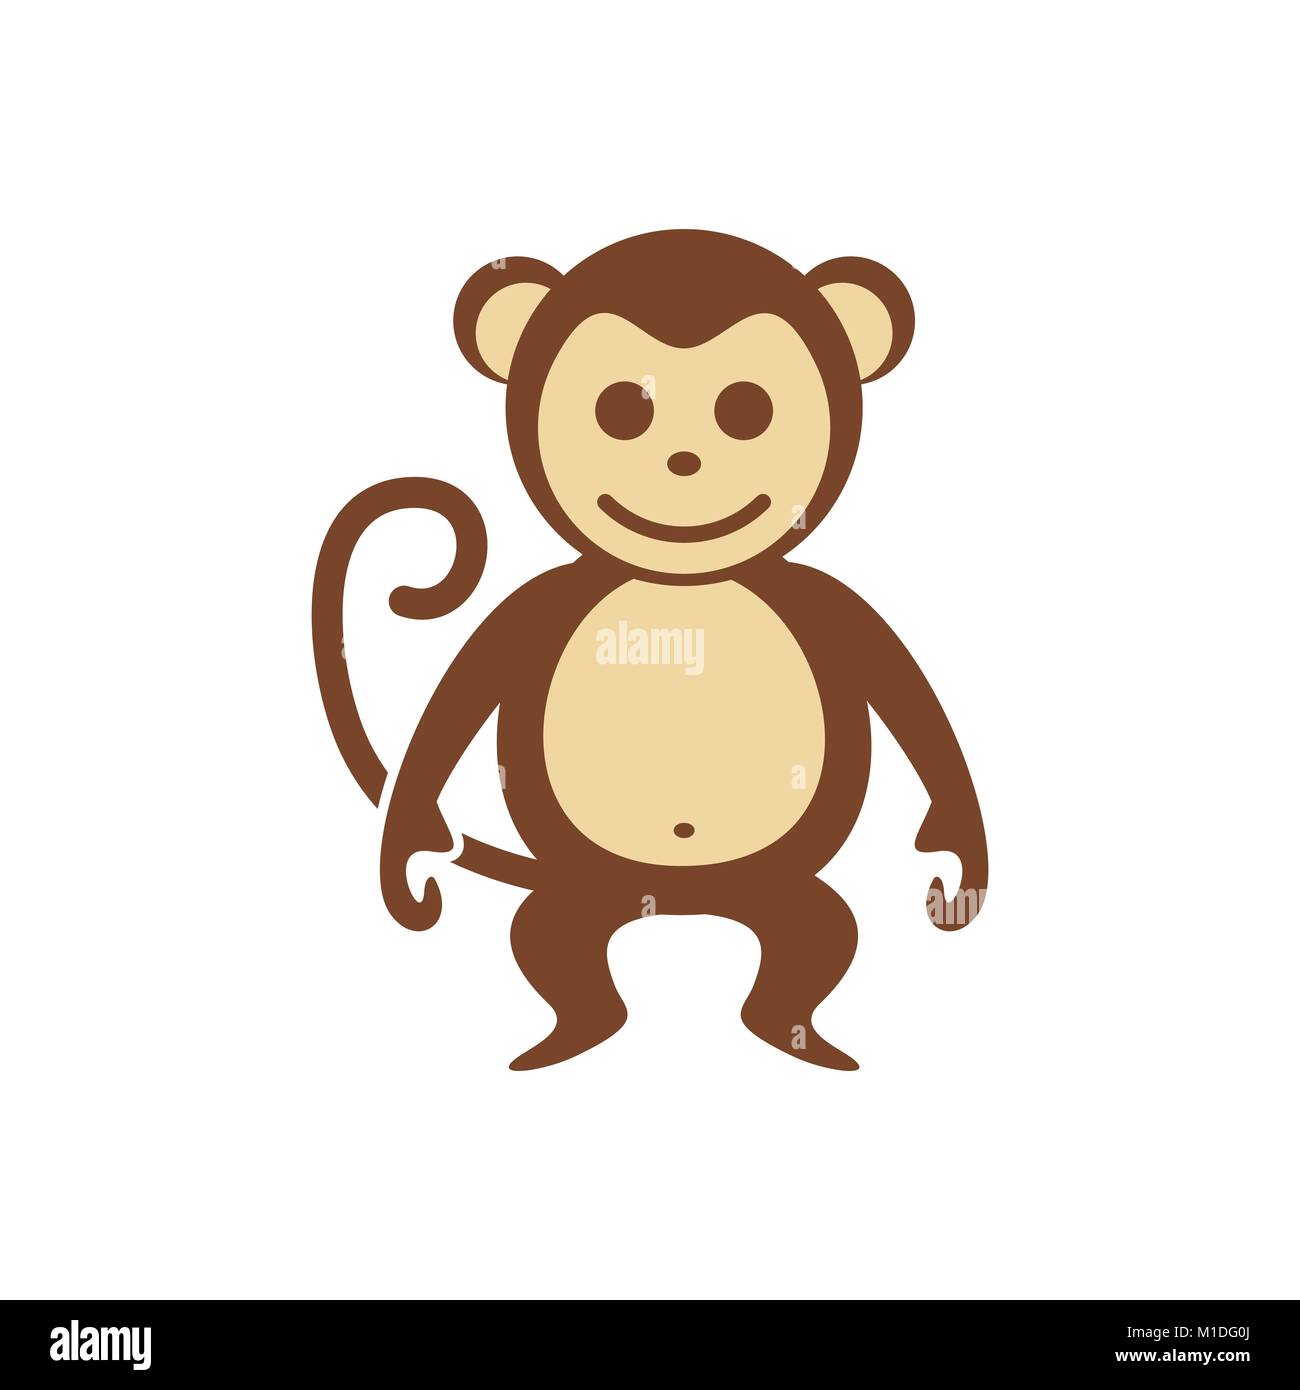 Smiling Cartoon Monkey Vector Graphic Illustration Design Stock Vector